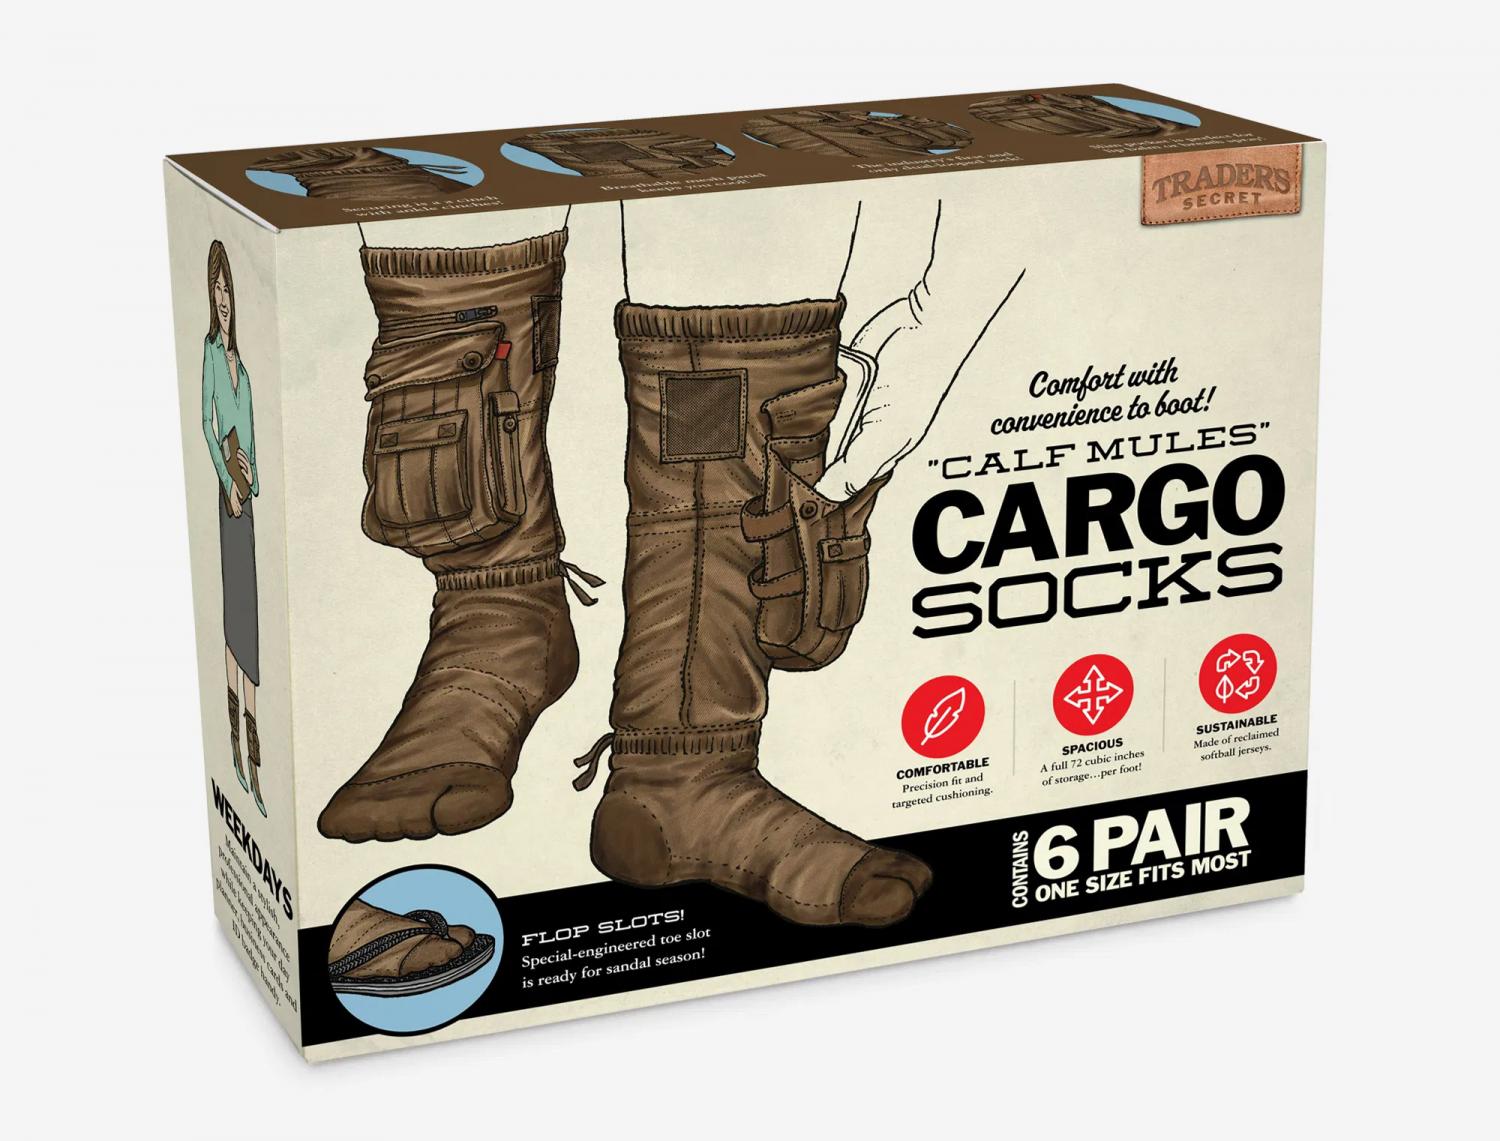 Cargo Socks - Socks with cargo pockets for storing your keys, snacks, or cash